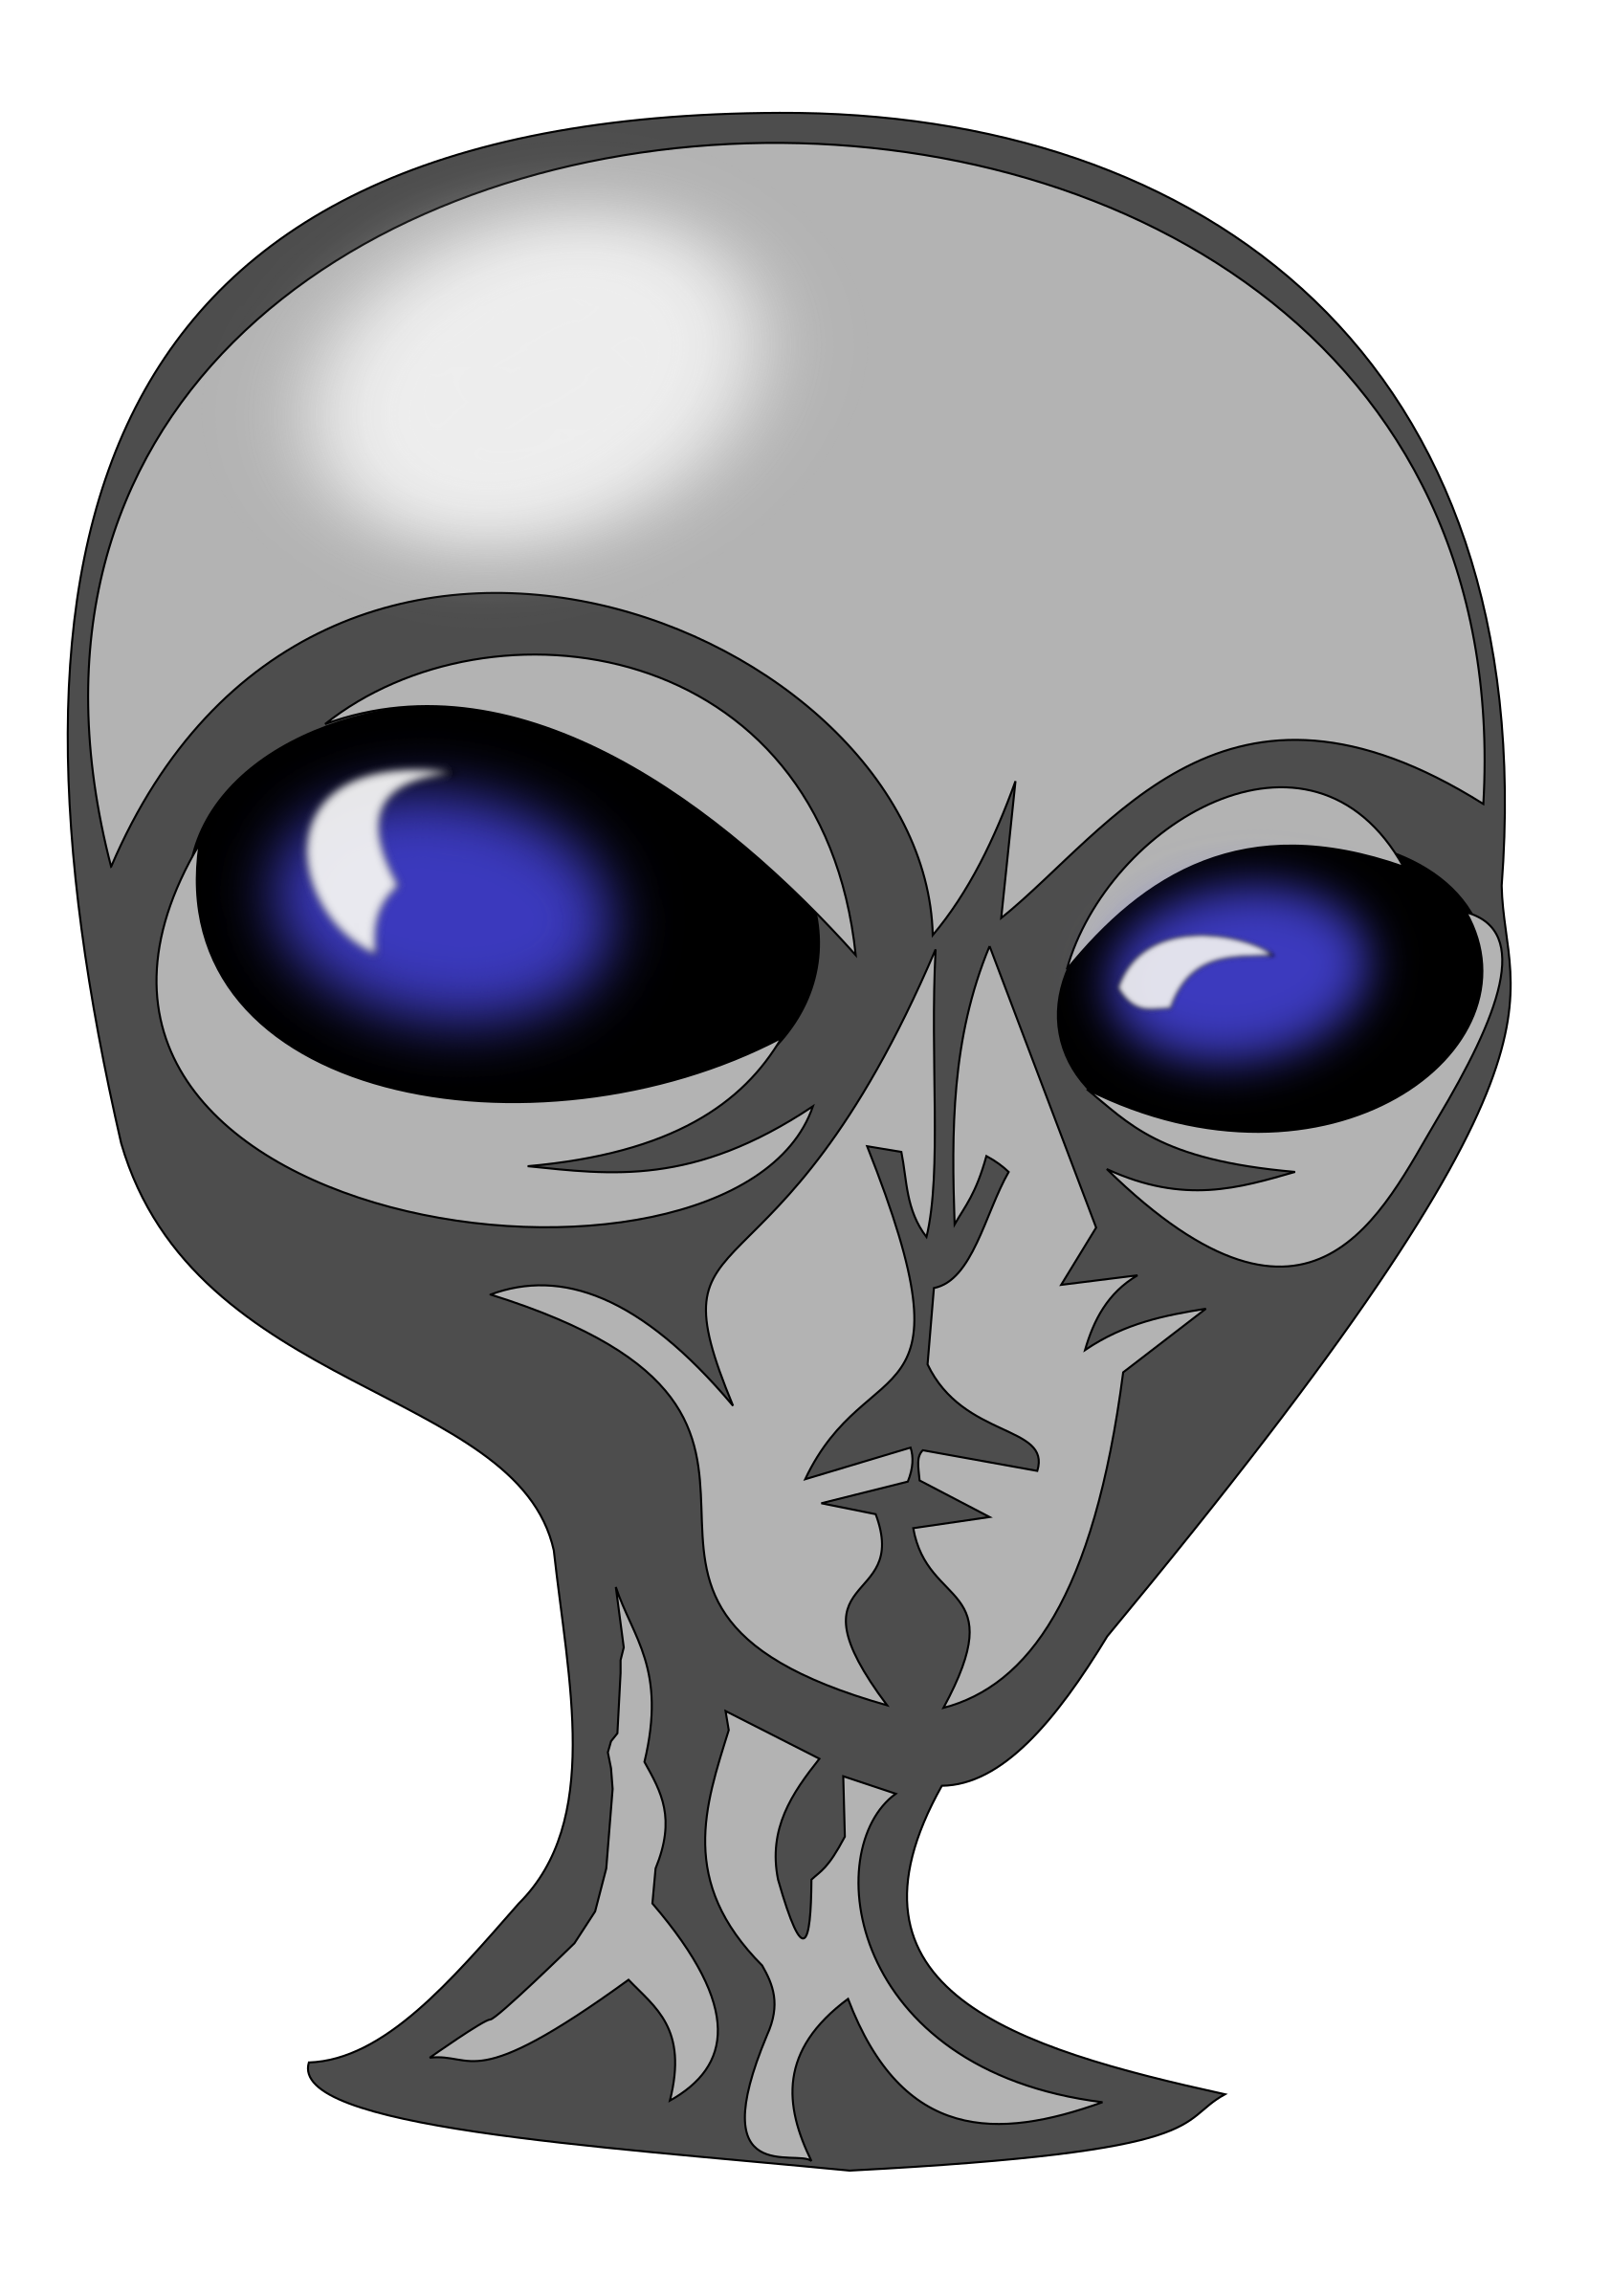 Similar Alien PNG Image